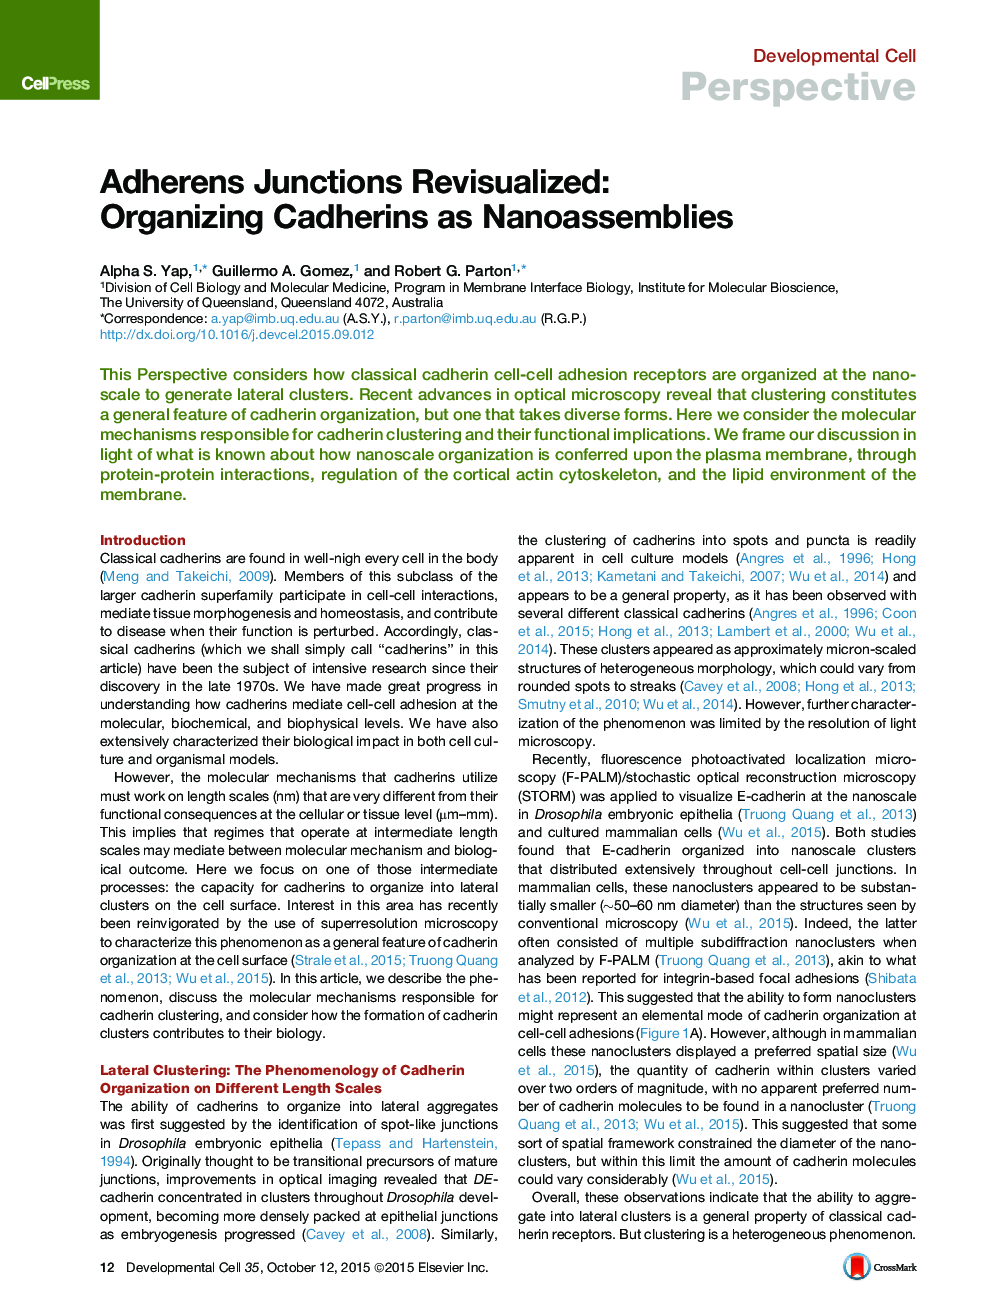 Adherens Junctions Revisualized: Organizing Cadherins as Nanoassemblies